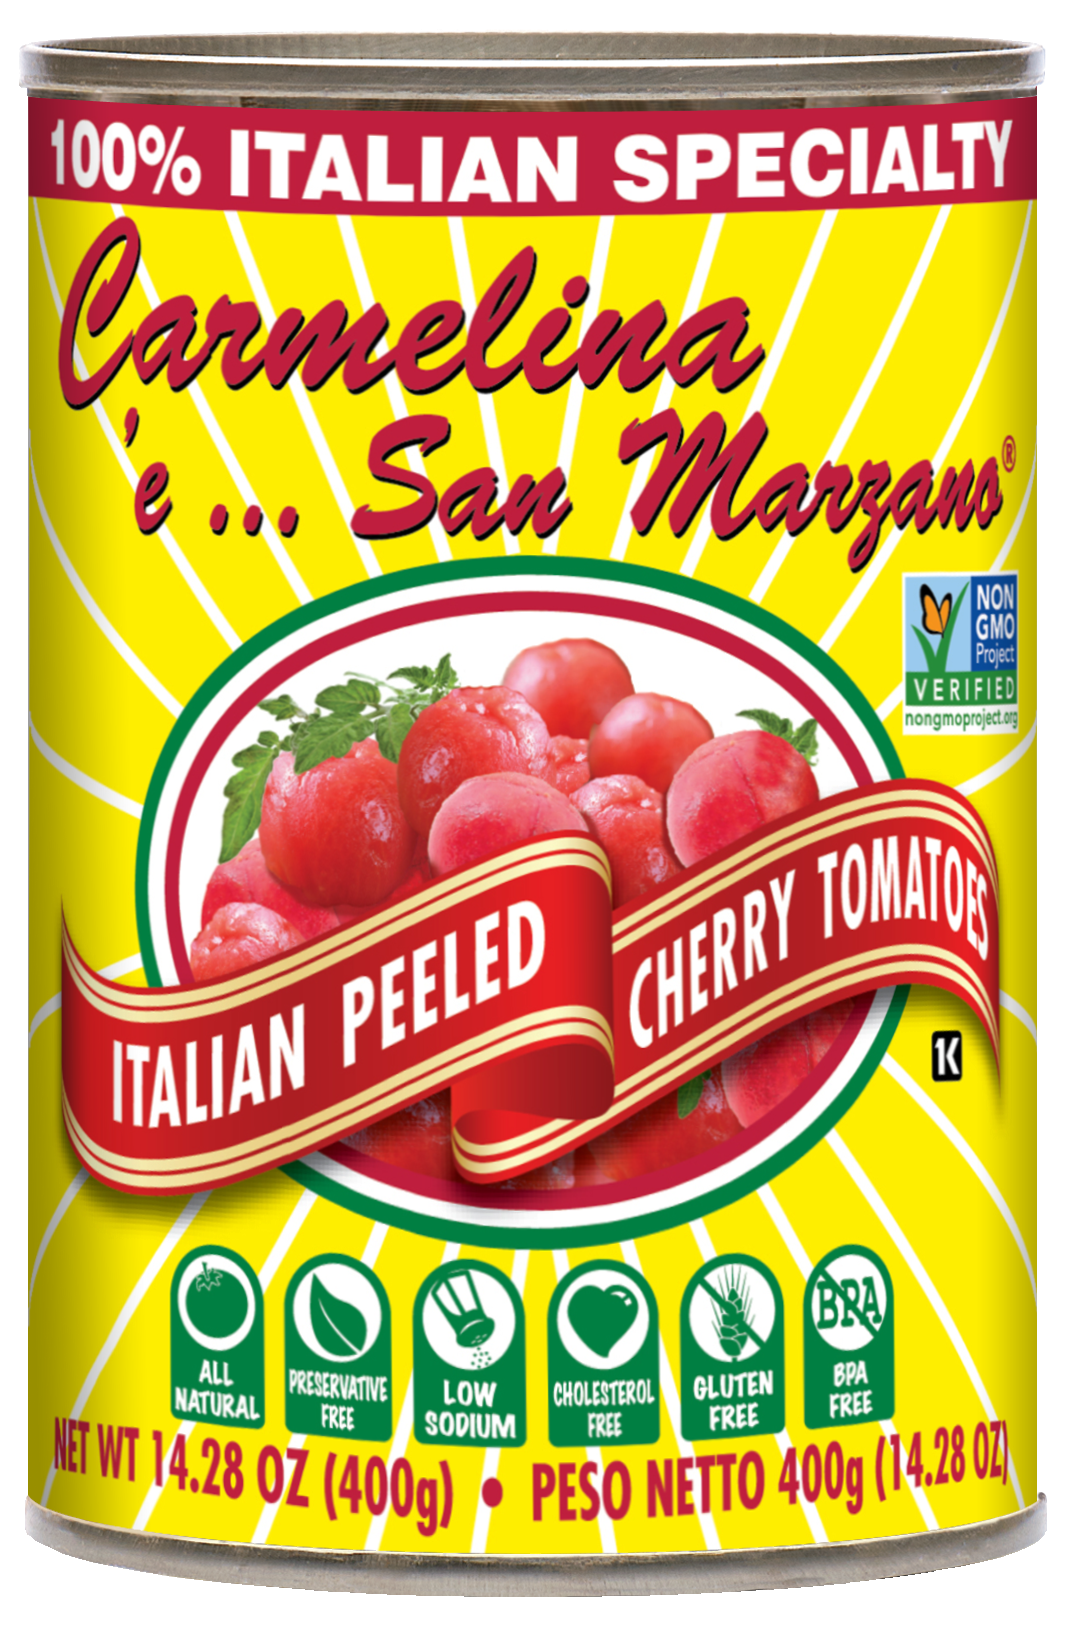 Italian Peeled Cherry Tomatoes in Puree